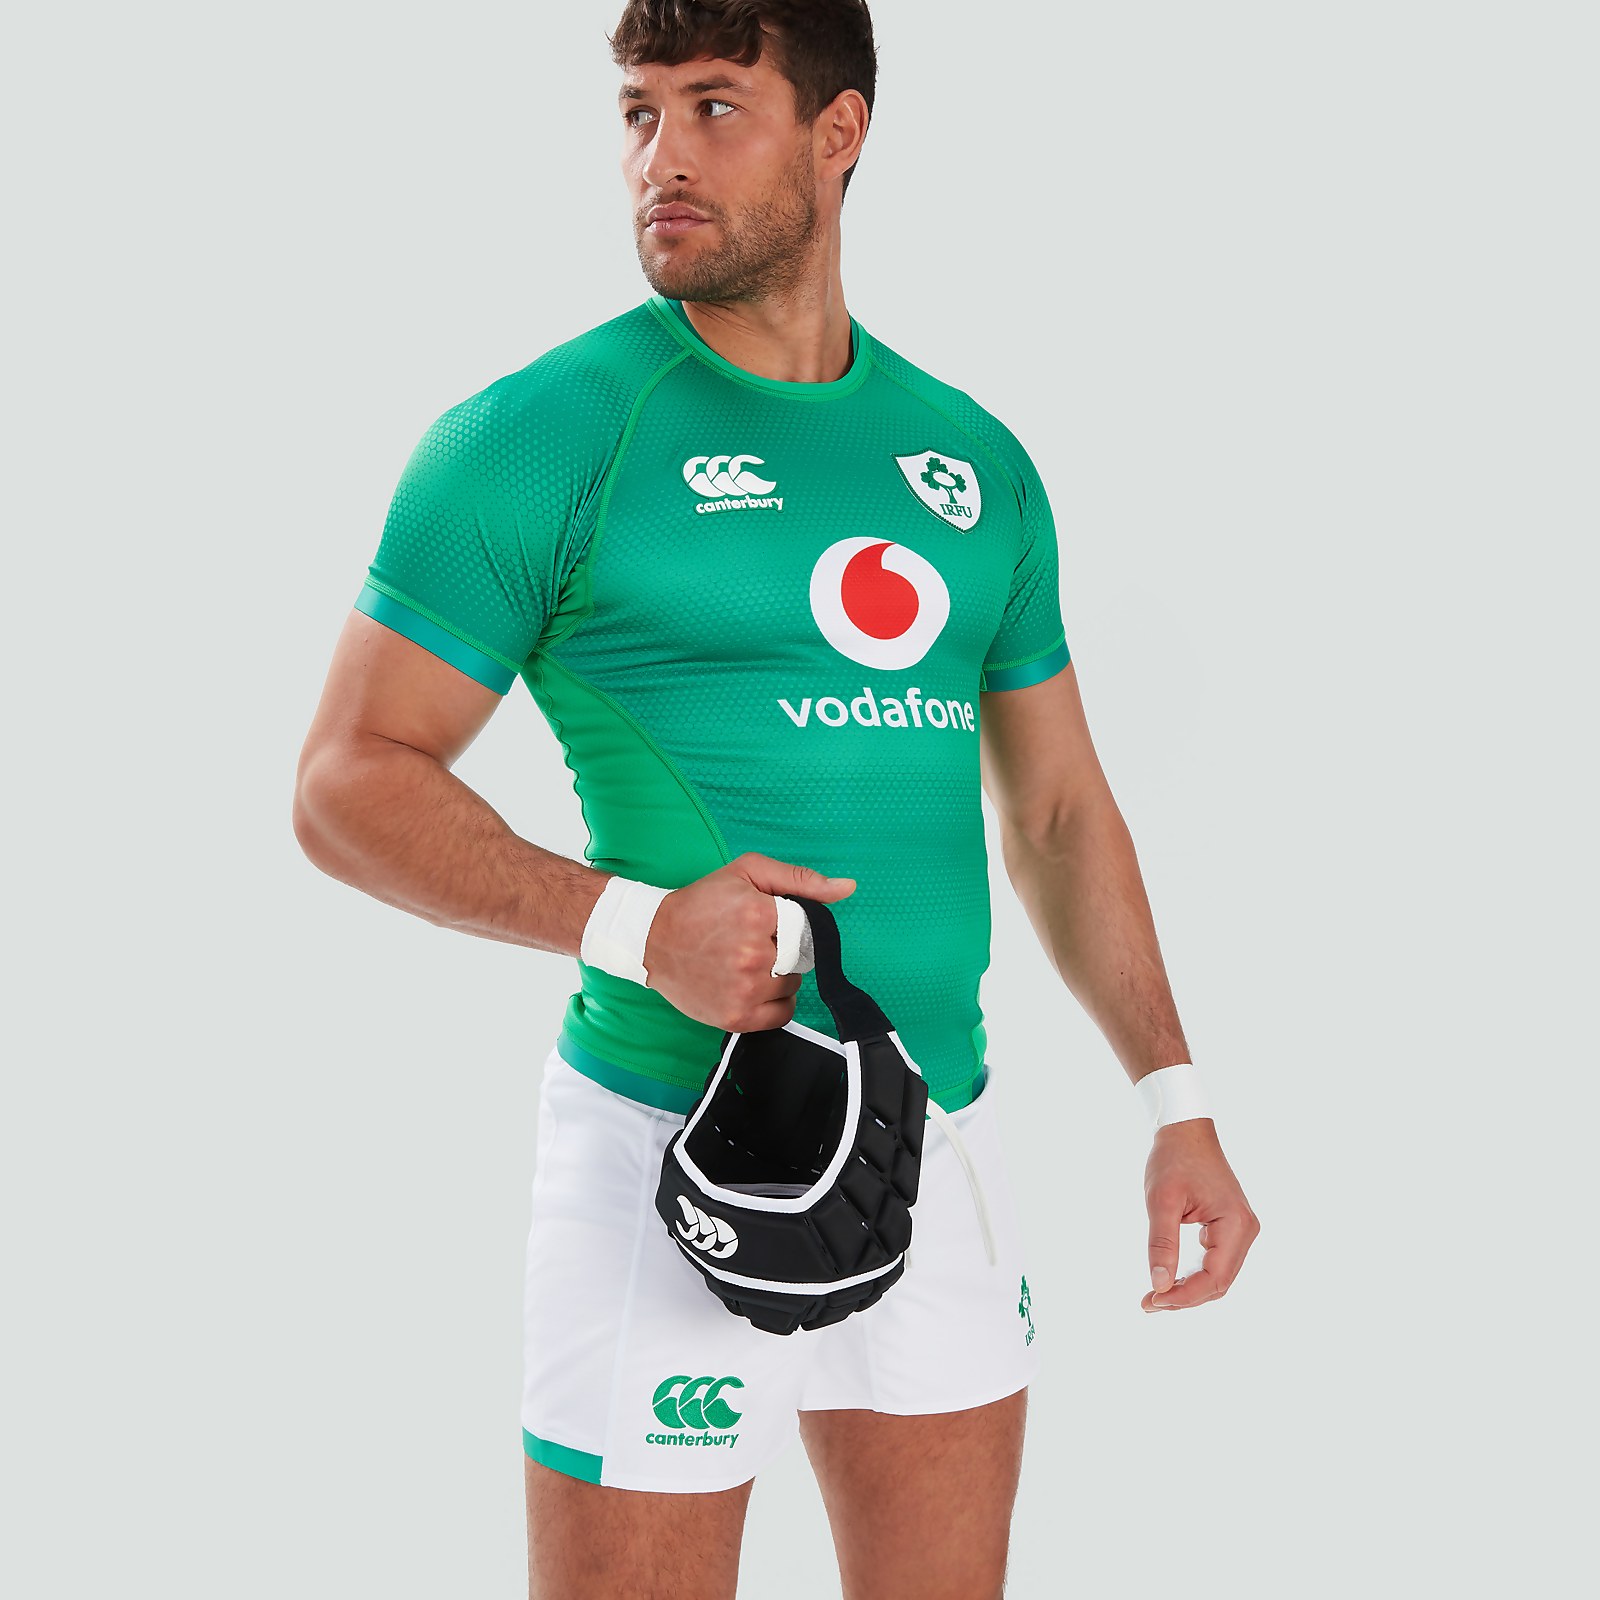 New Canterbury Men's Rugby Jersey Ireland Rugby VapoDri Home Test Shirt 